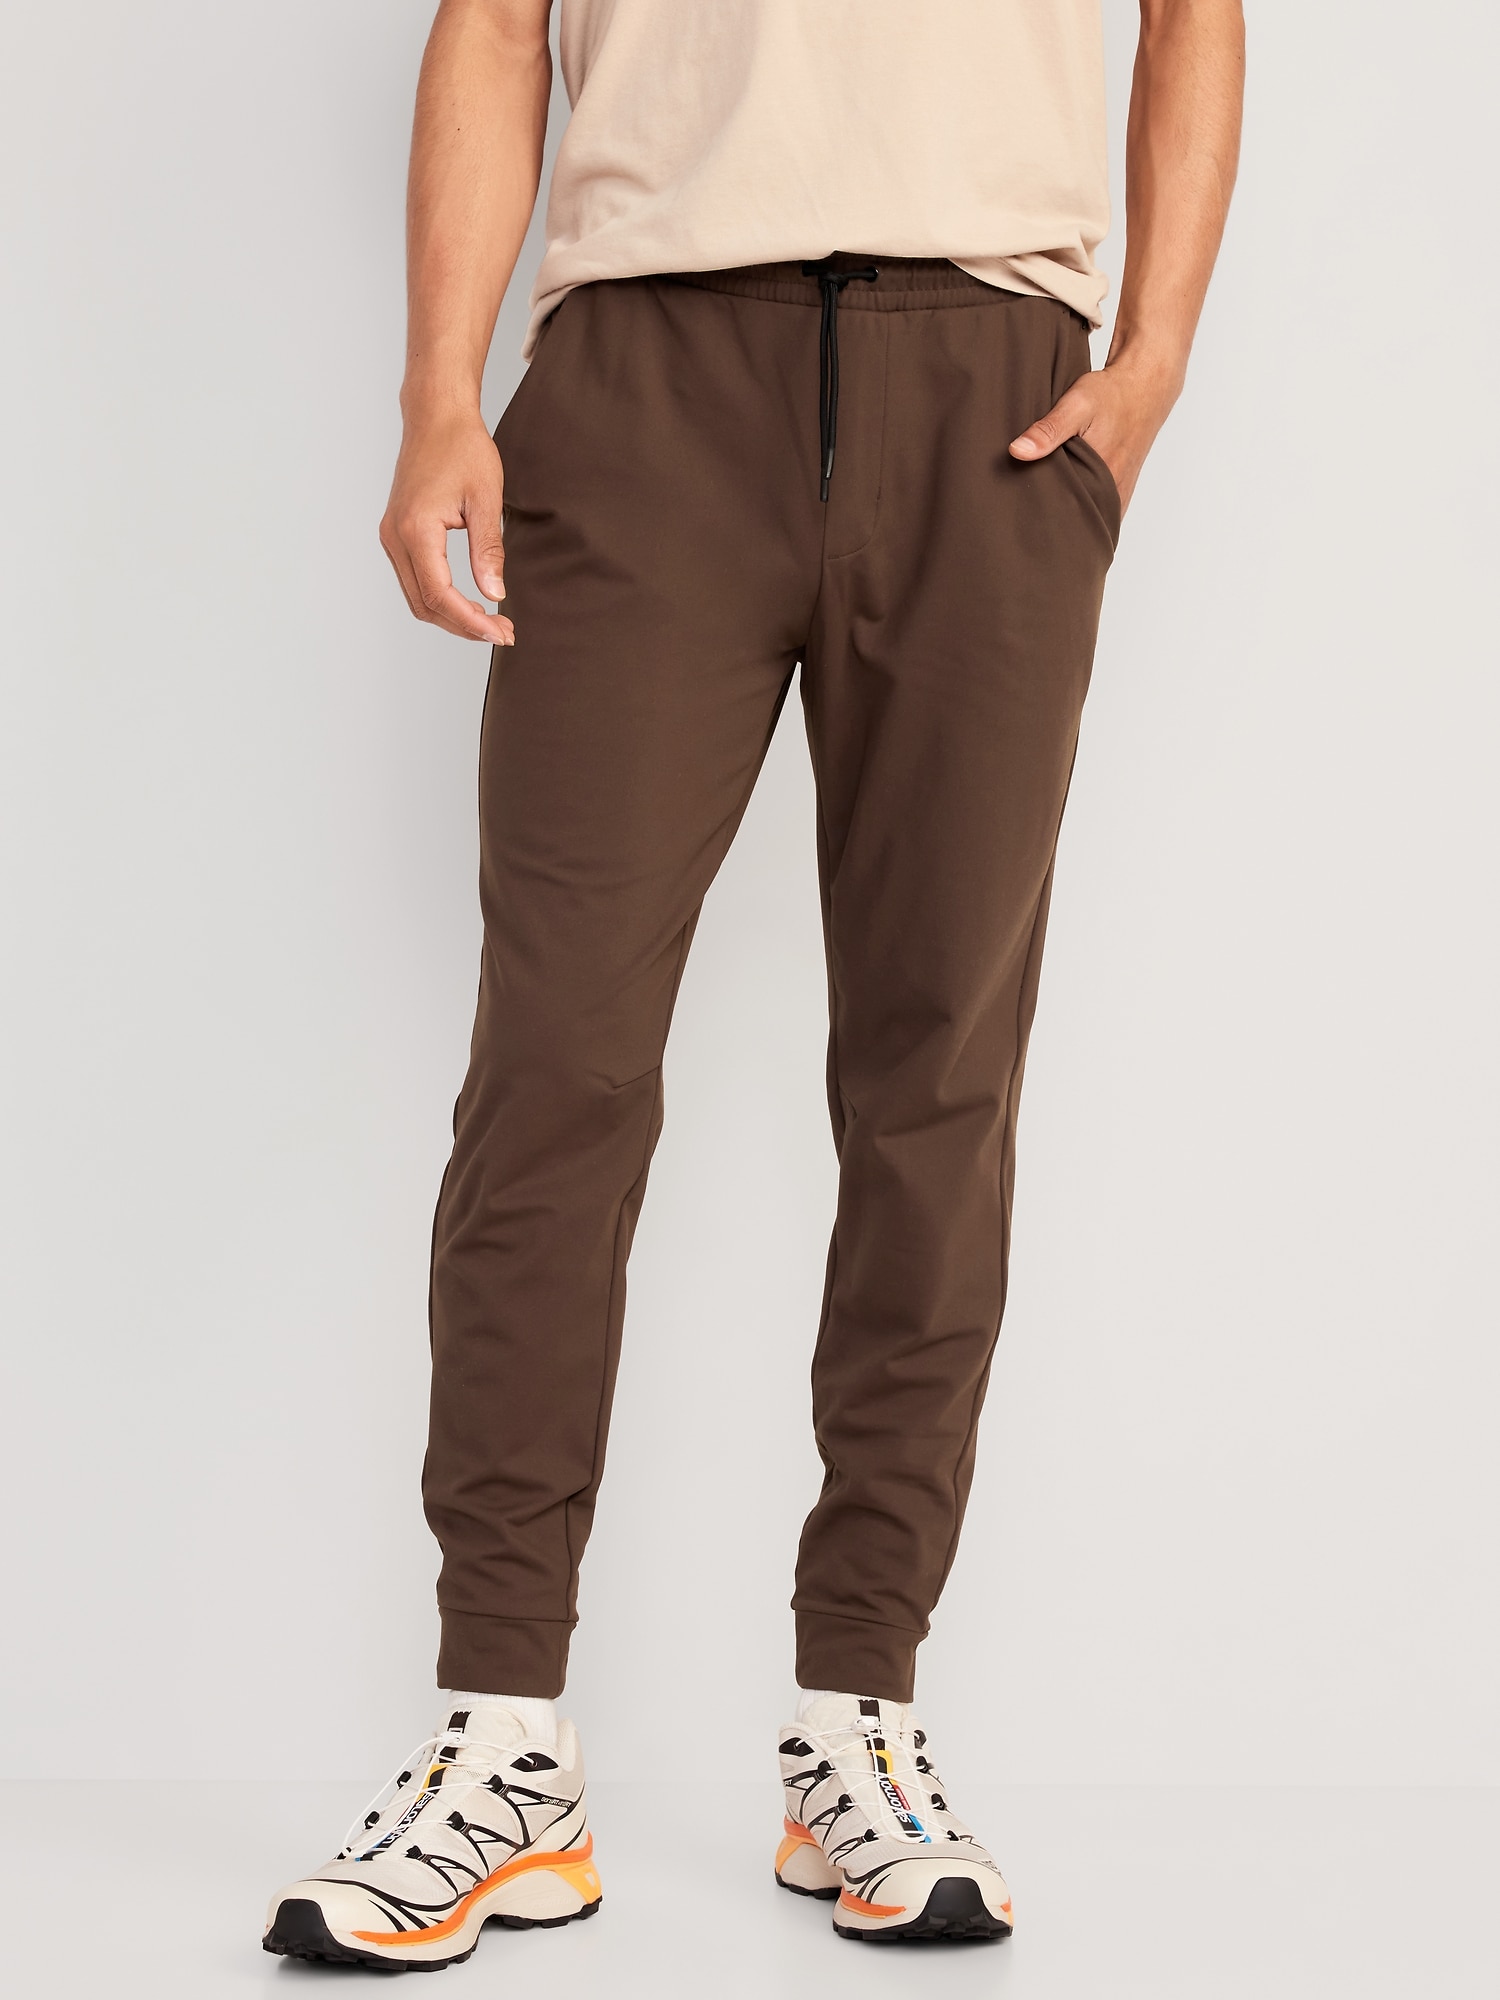 Brown jogger pants